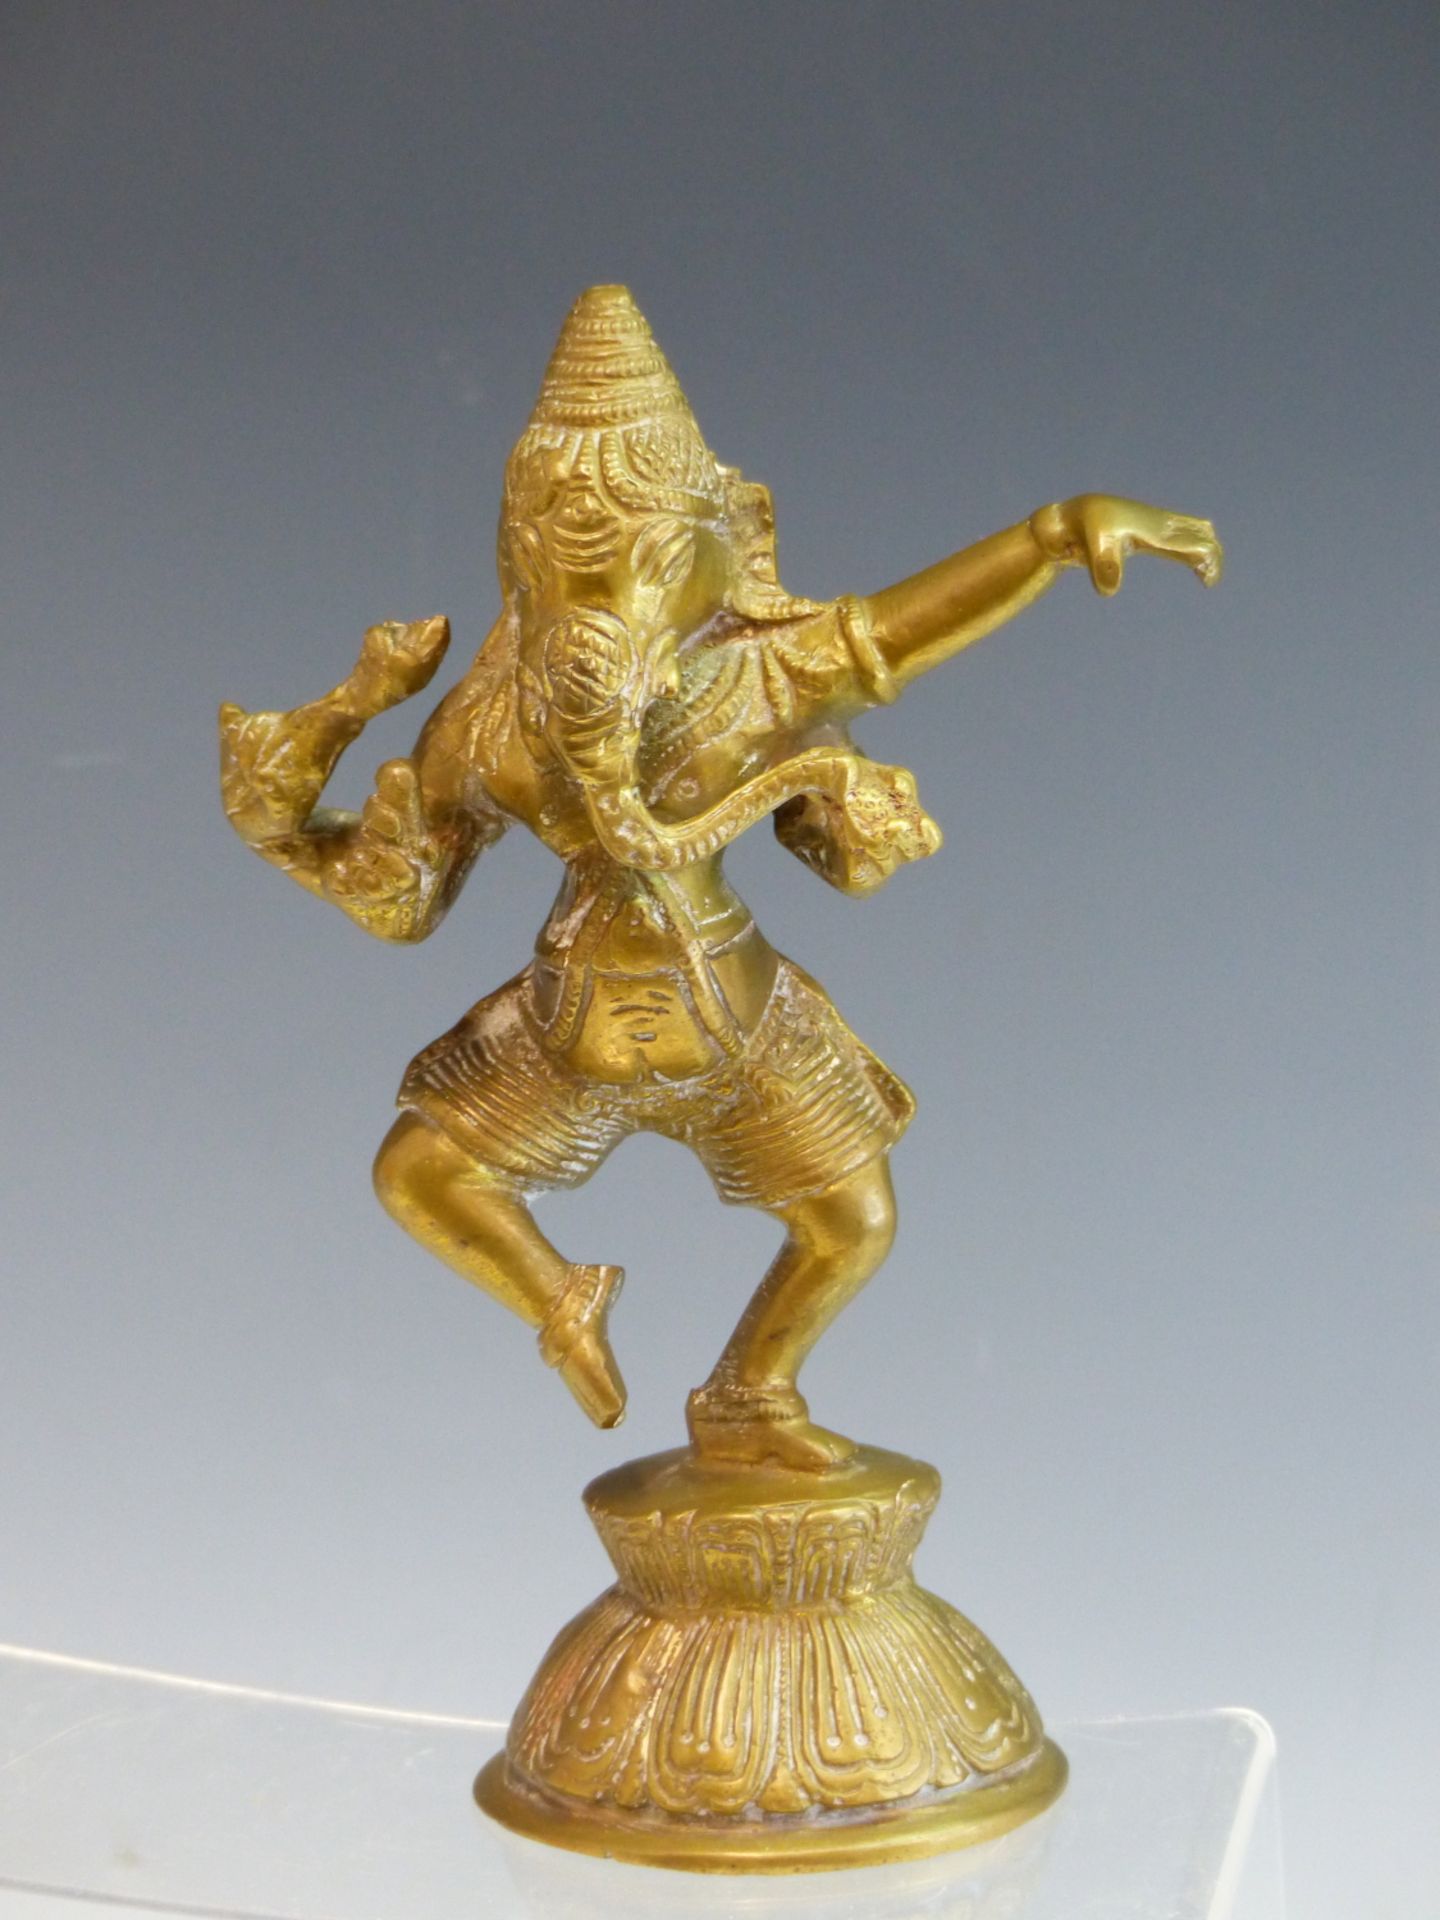 A CAST BRASS INDIAN FIGURE OF THE GOD GANESHA (20TH CENTURY) 21 cm HIGH.